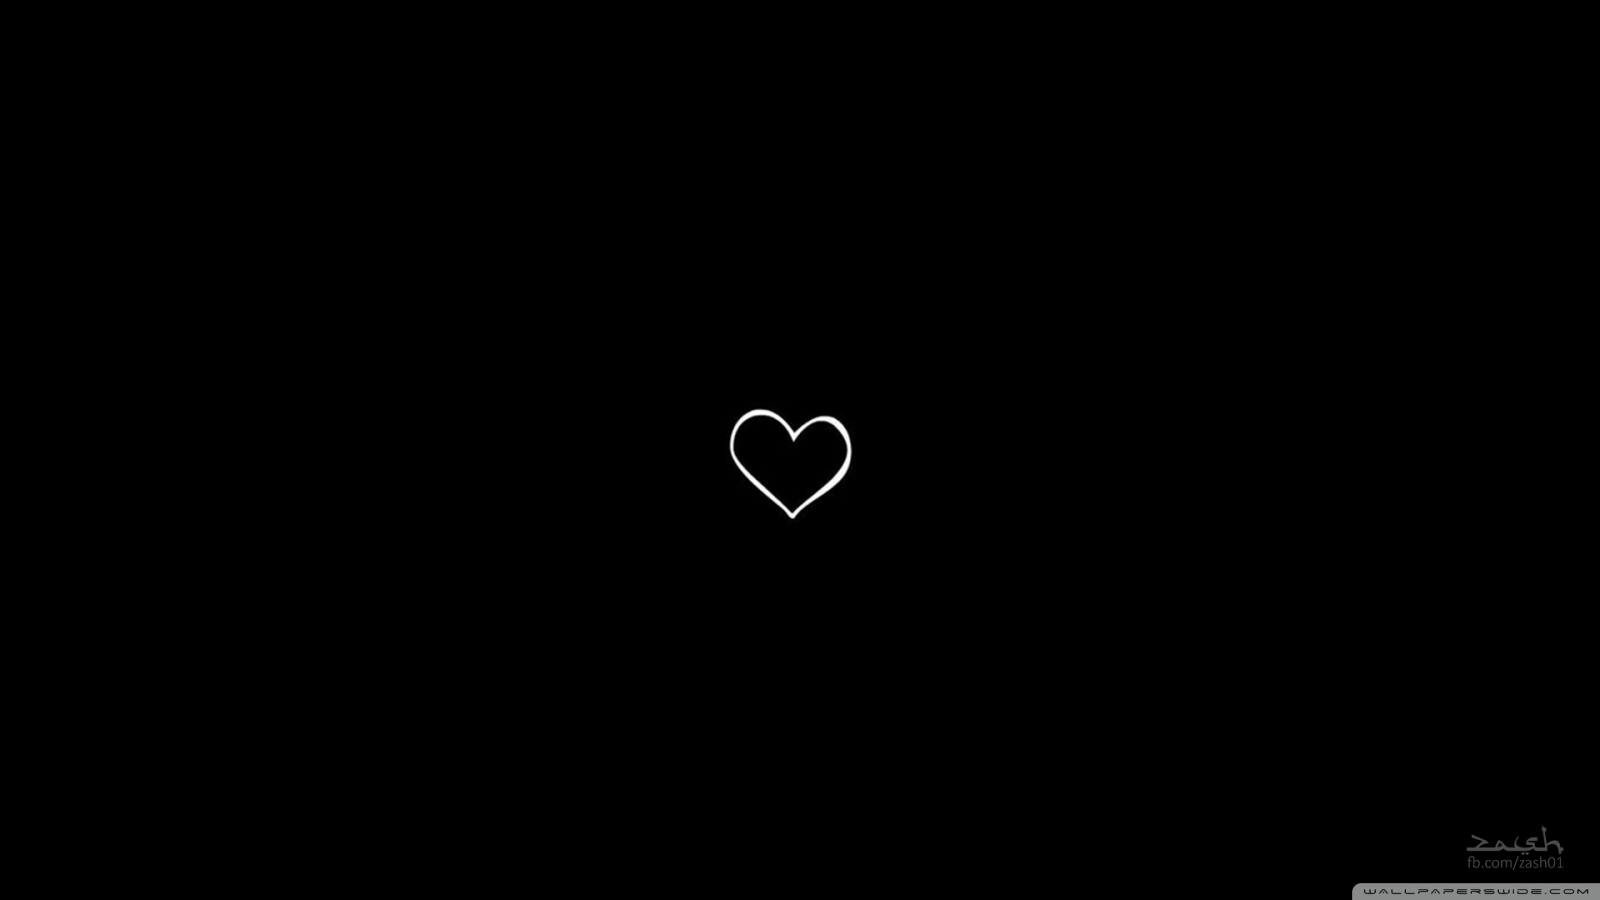 Black Background With Small White Heart - art-probono